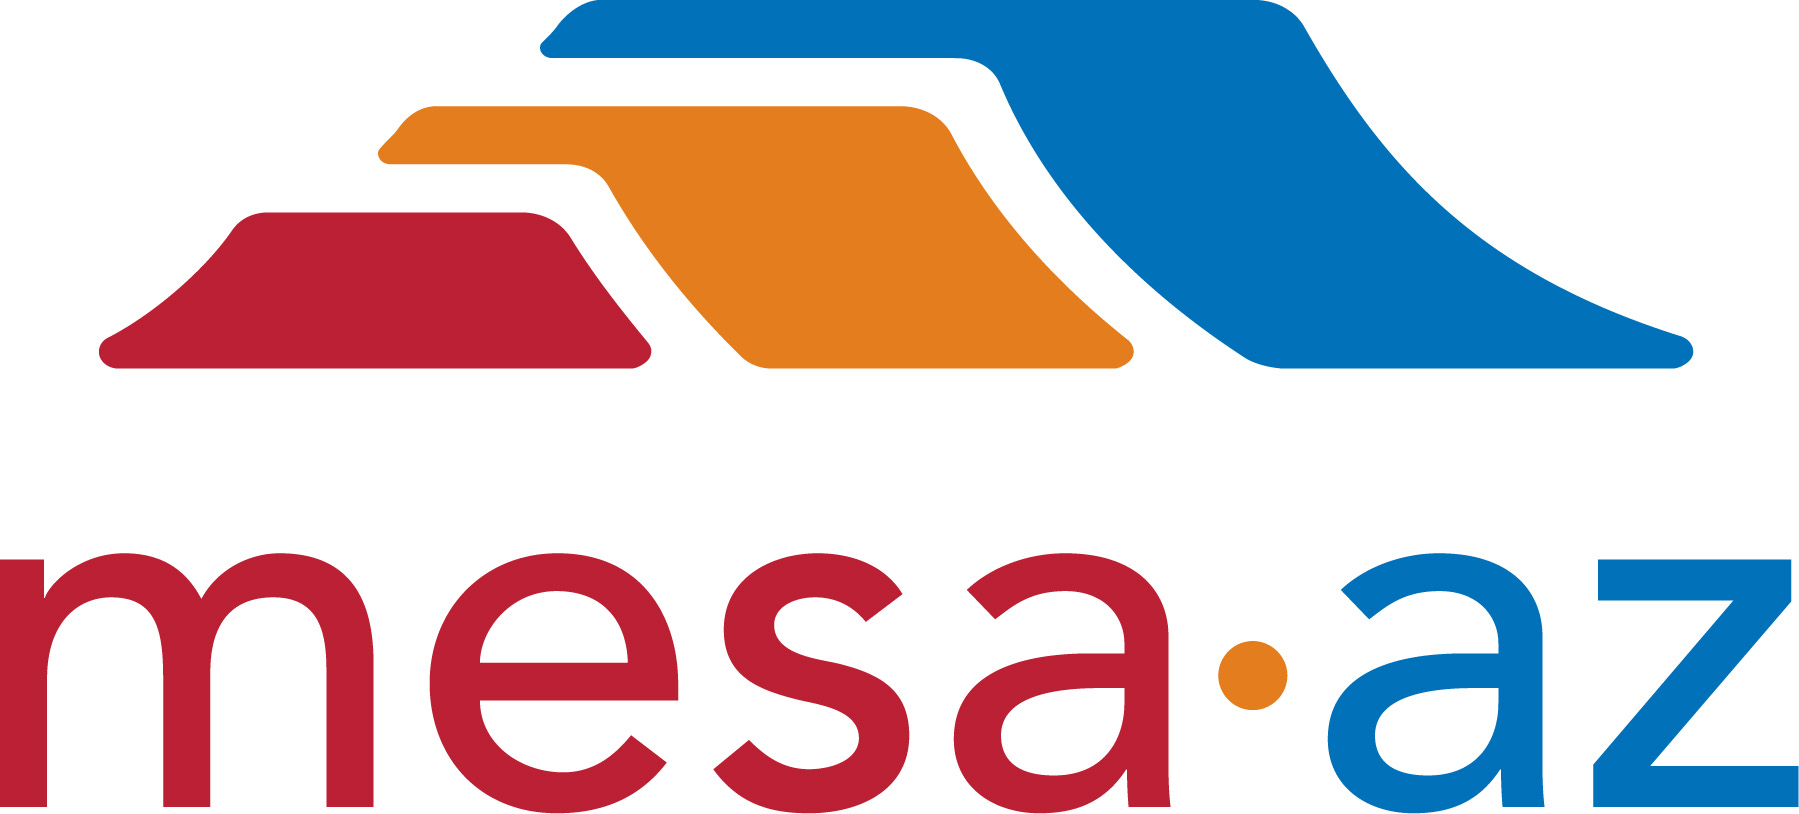 city-of-mesa-logo.jpg